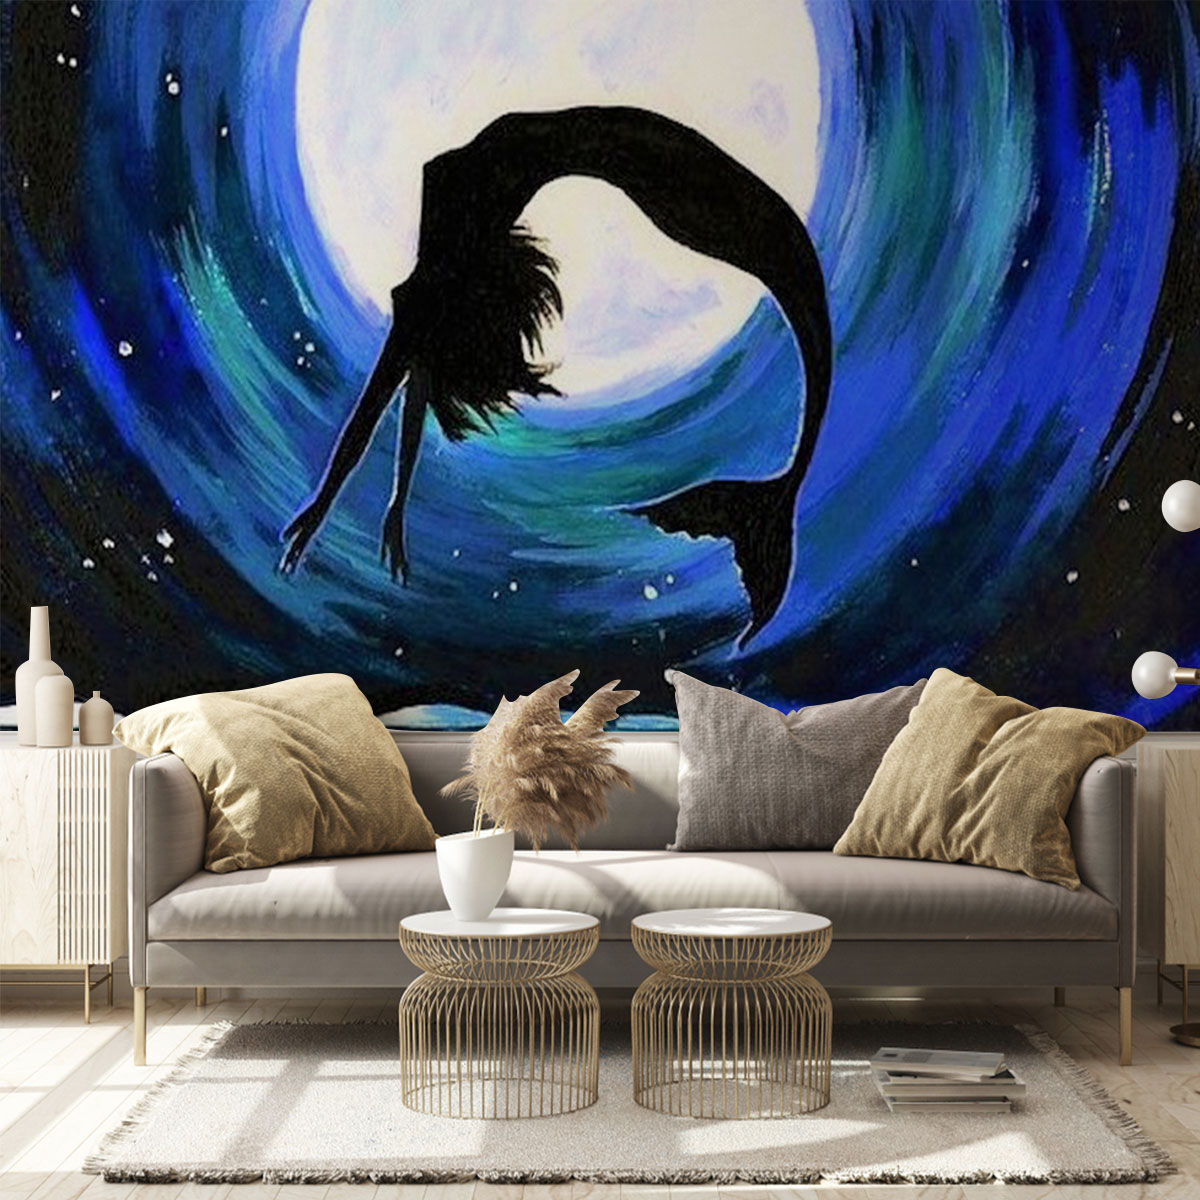 Black Mermaid And Moon Night Wall Mural